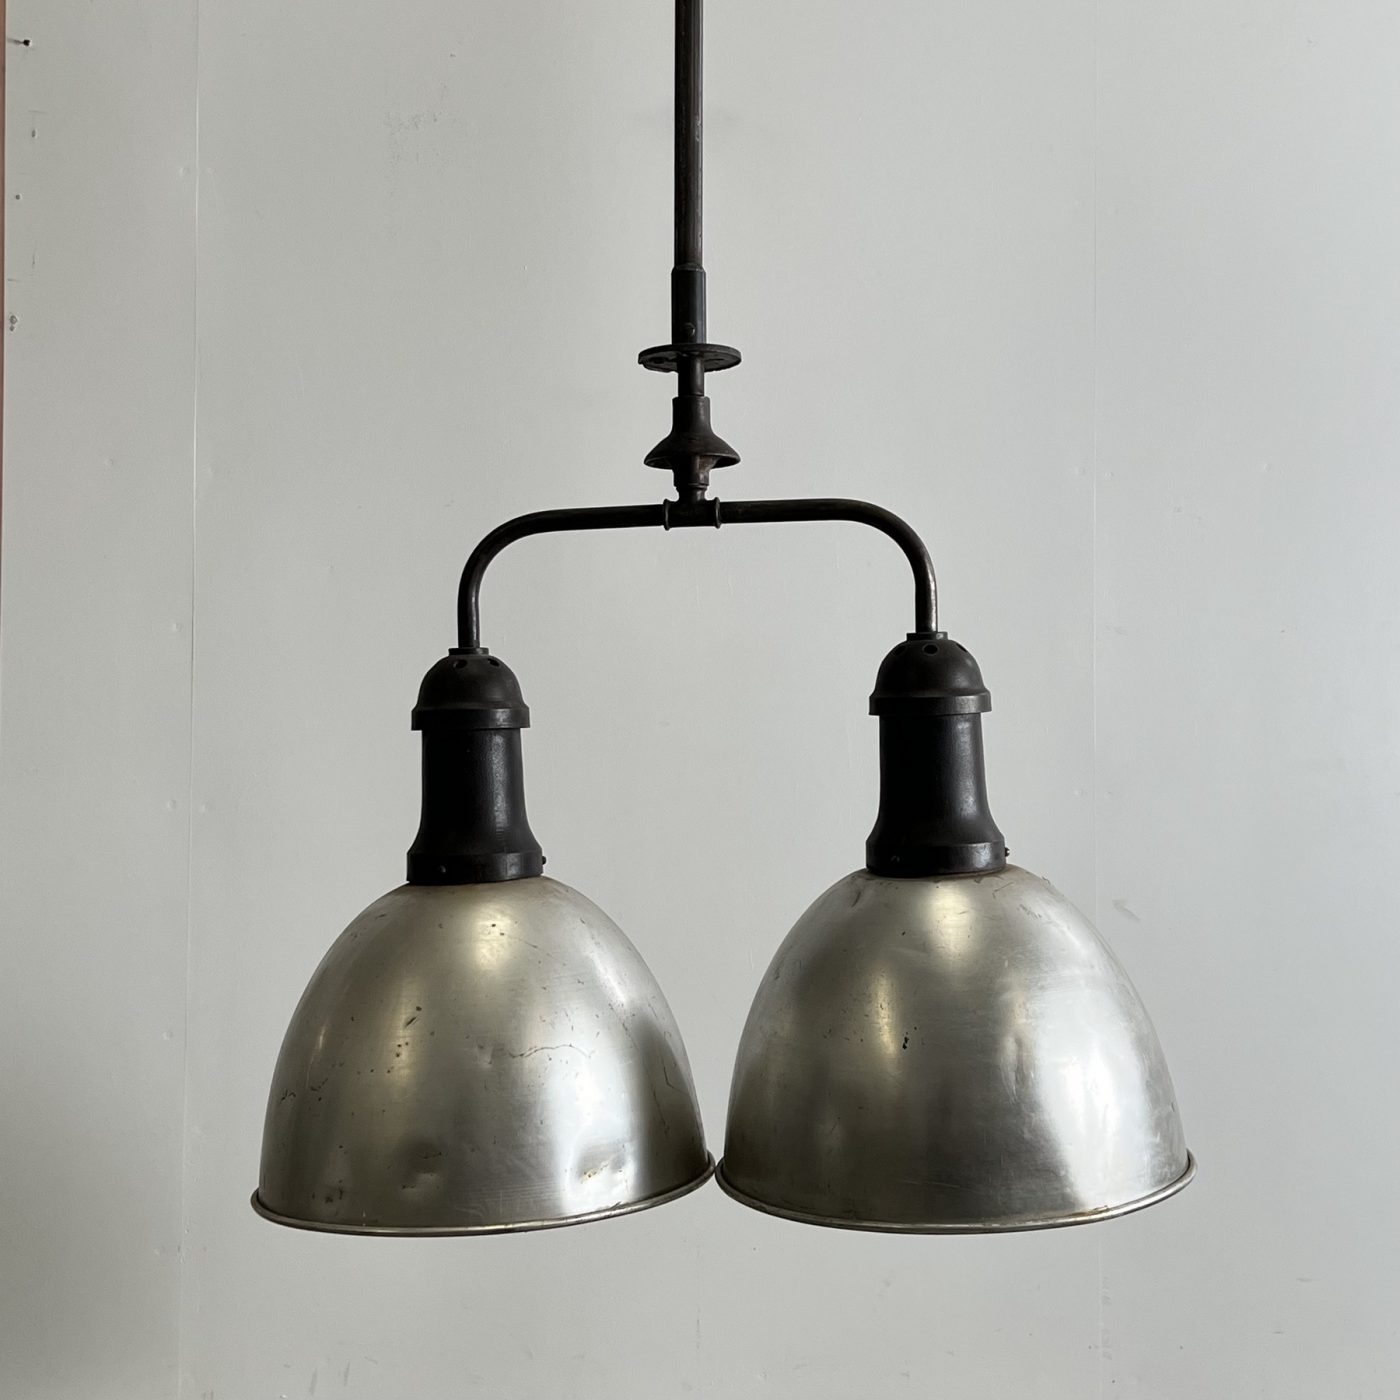 objet-vagabond-industrial-lamp0004